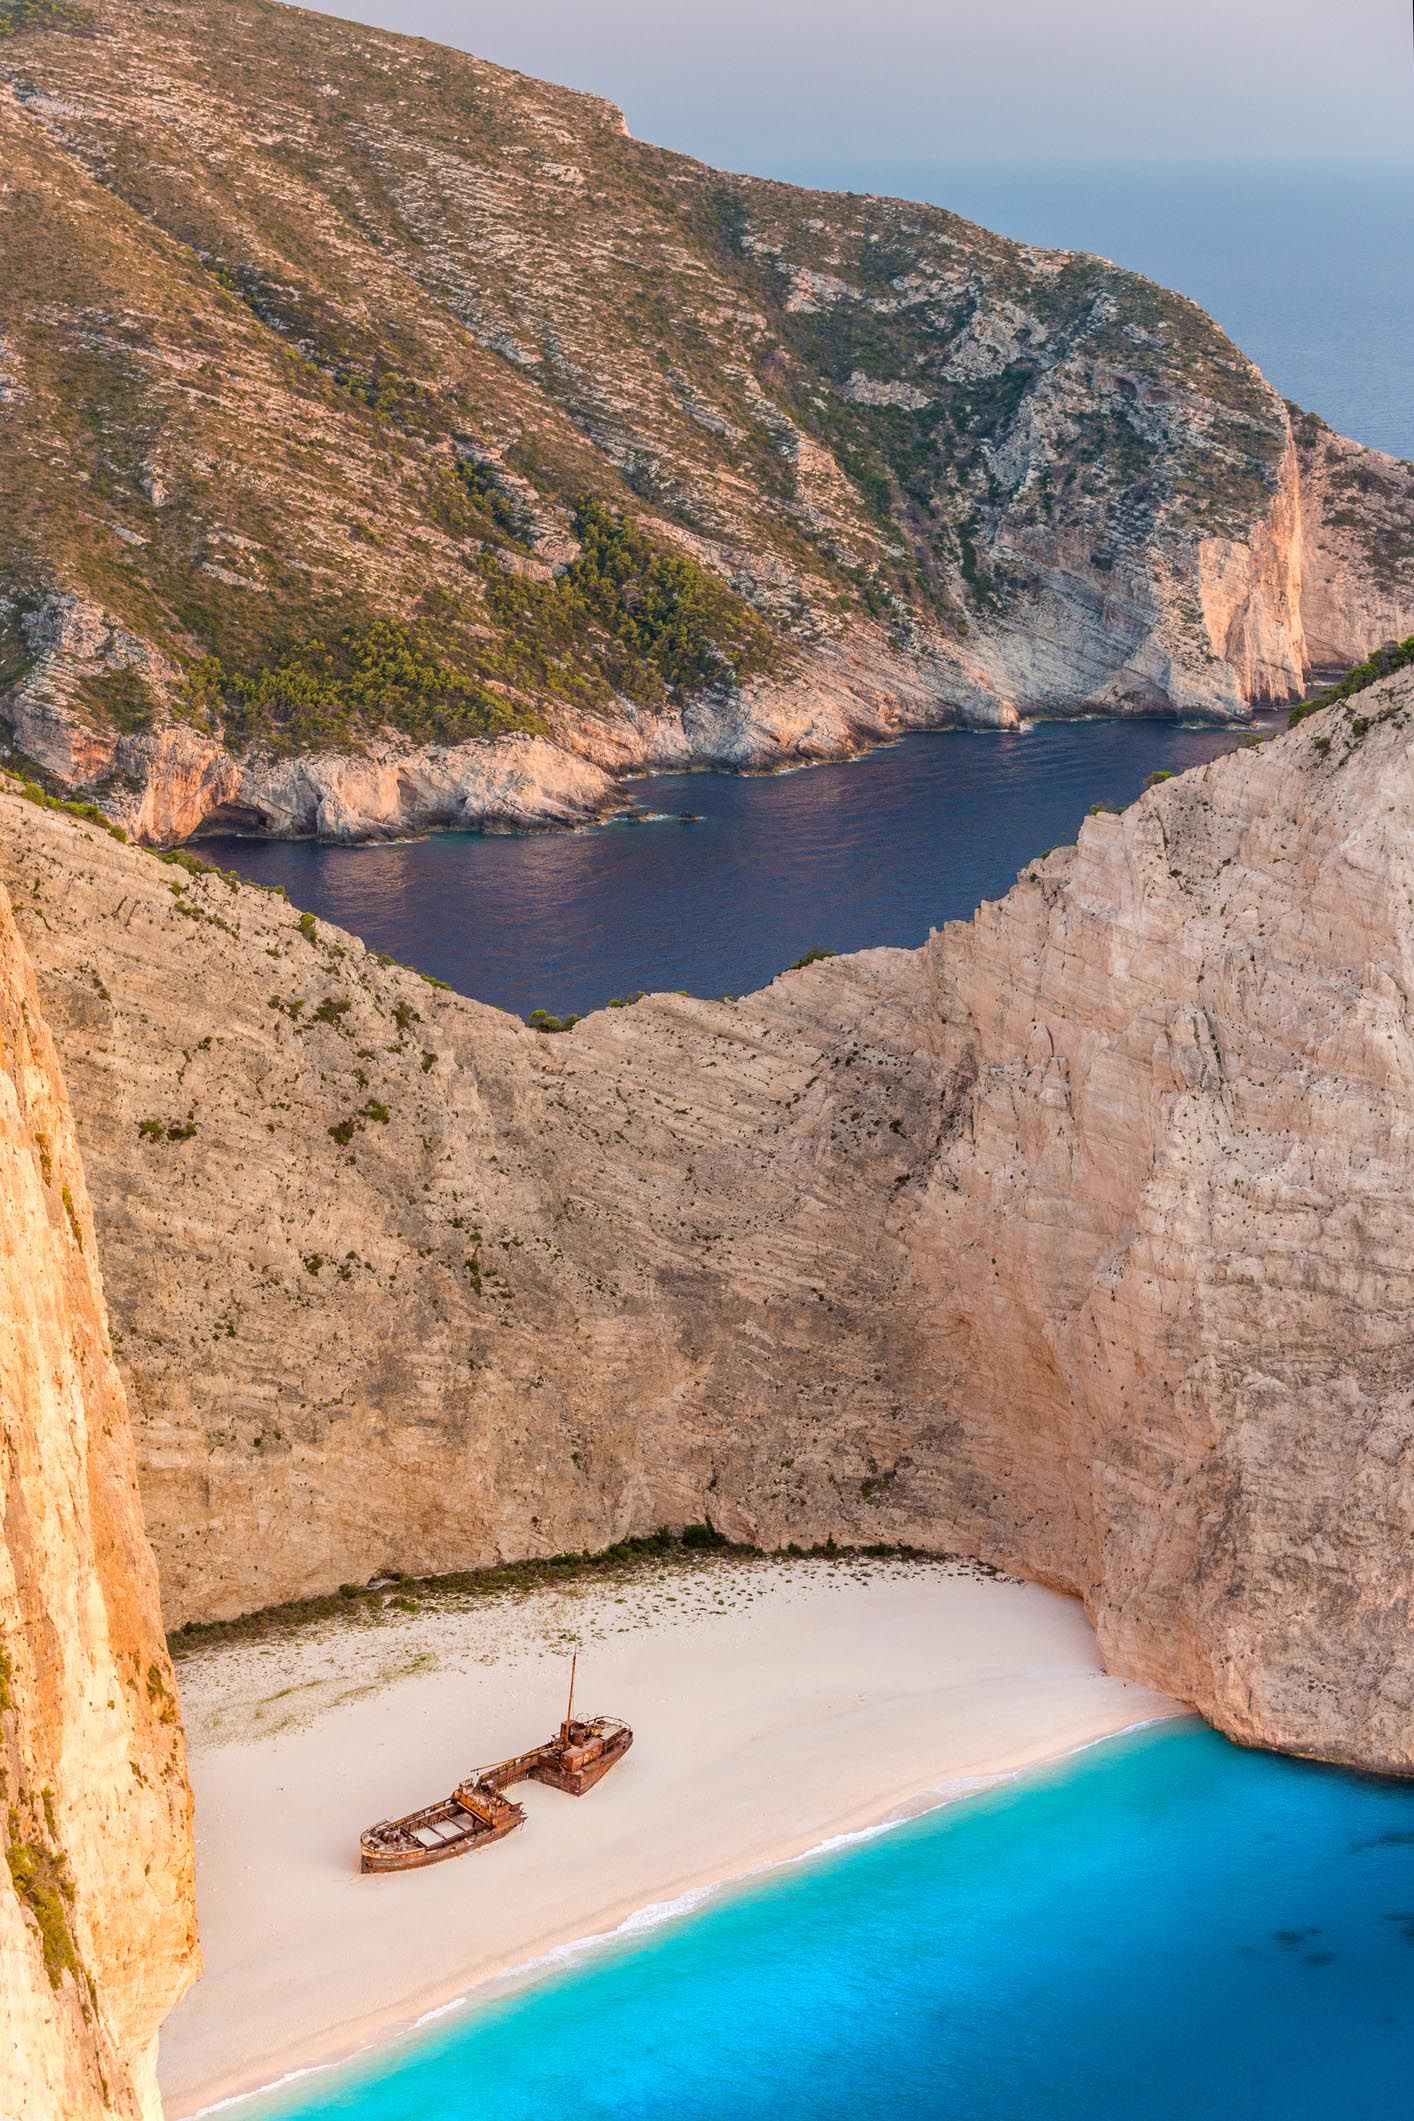 20 amazing cliffside beaches around the world